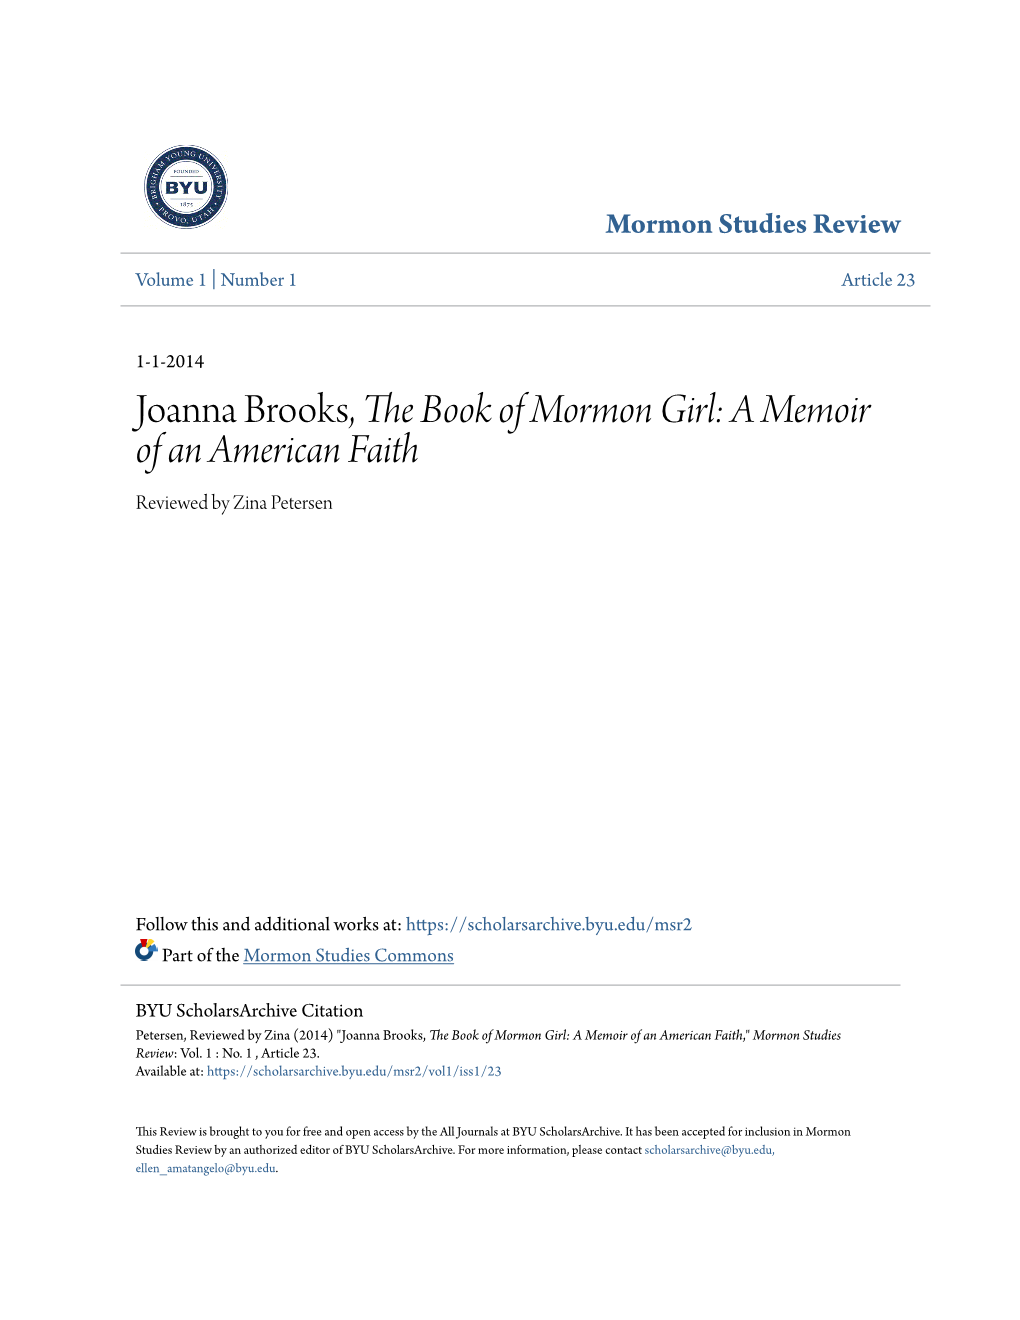 Joanna Brooks, the Book of Mormon Girl: a Memoir of an American Faith Reviewed by Zina Petersen